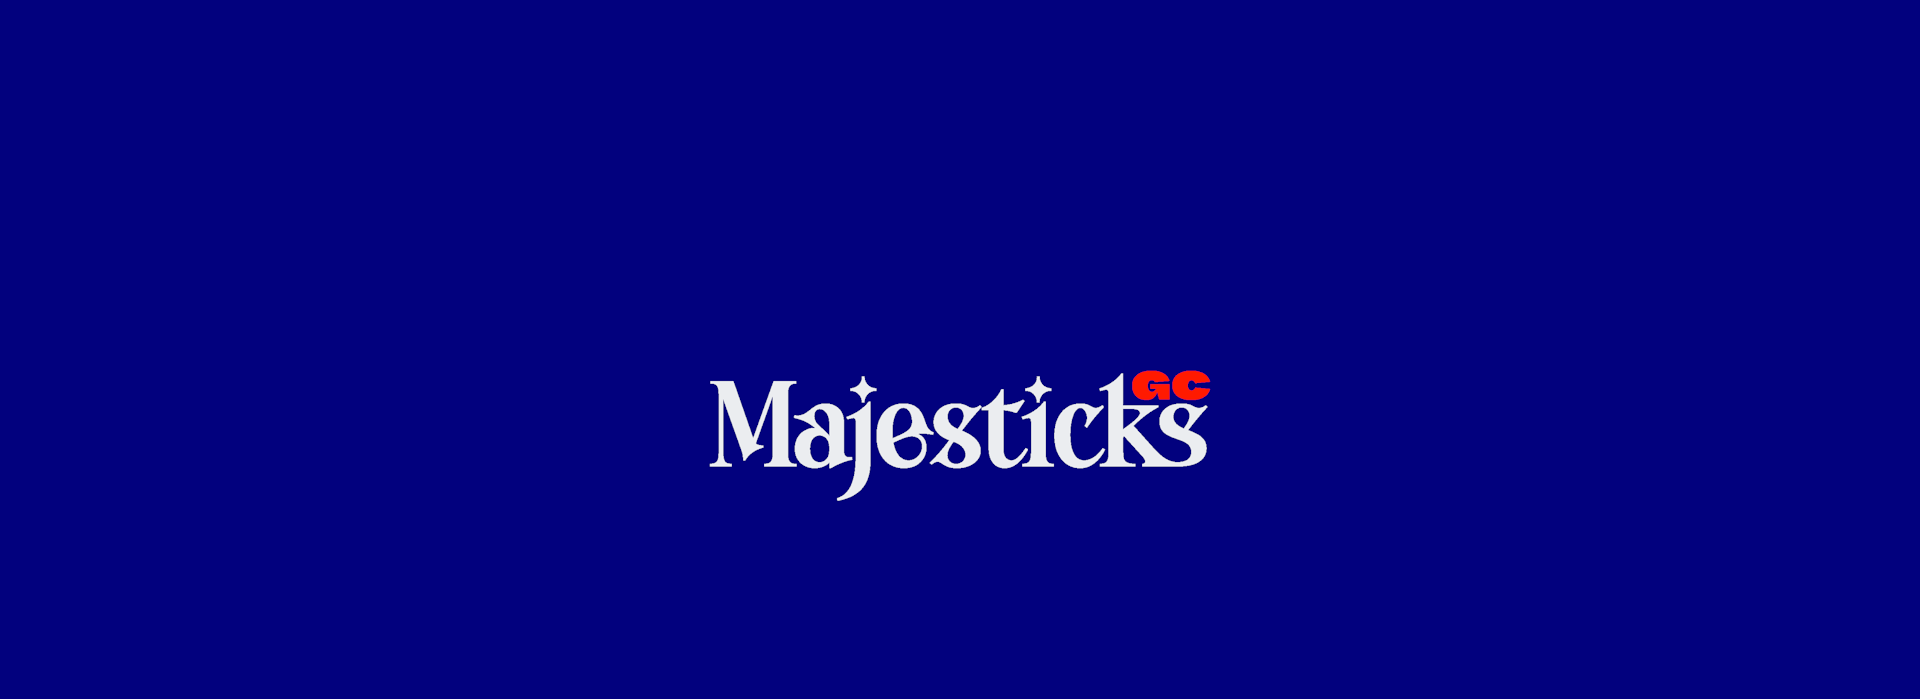 Majesticks-GC Wordmark